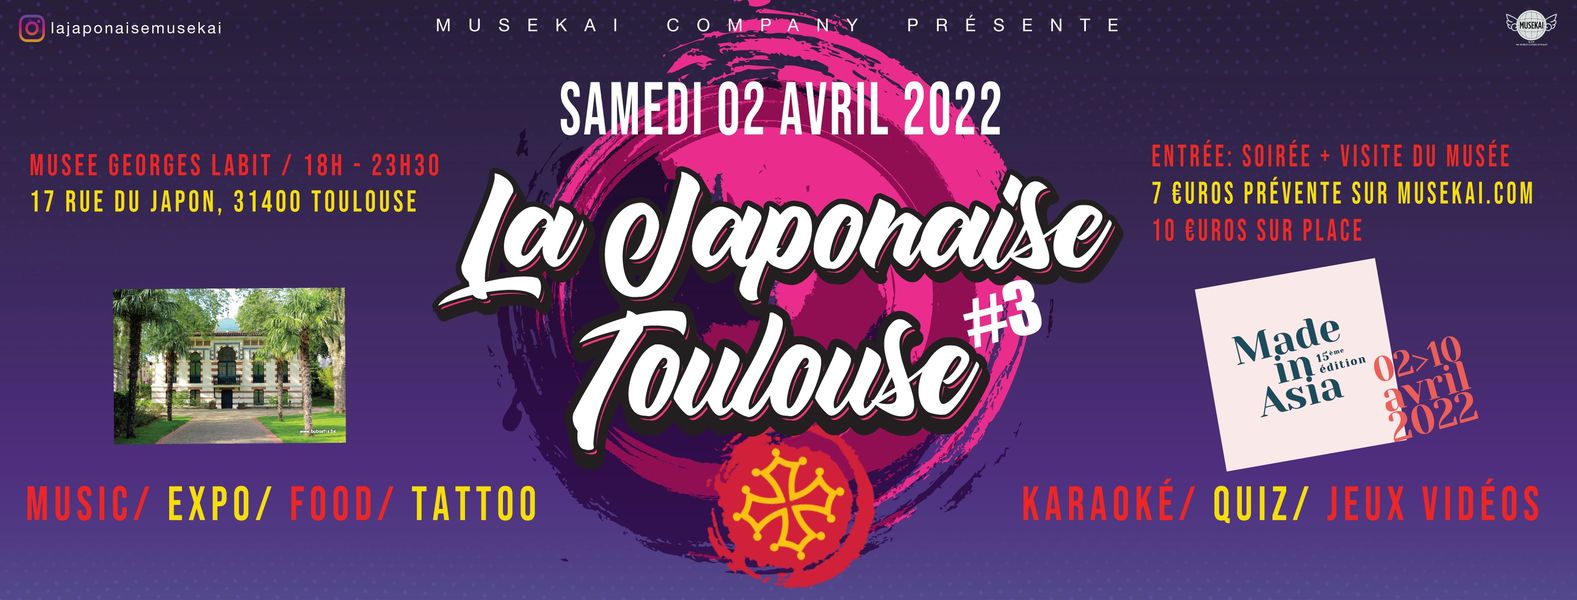 Festival Made In Asia : La Japonaise Toulouse #3